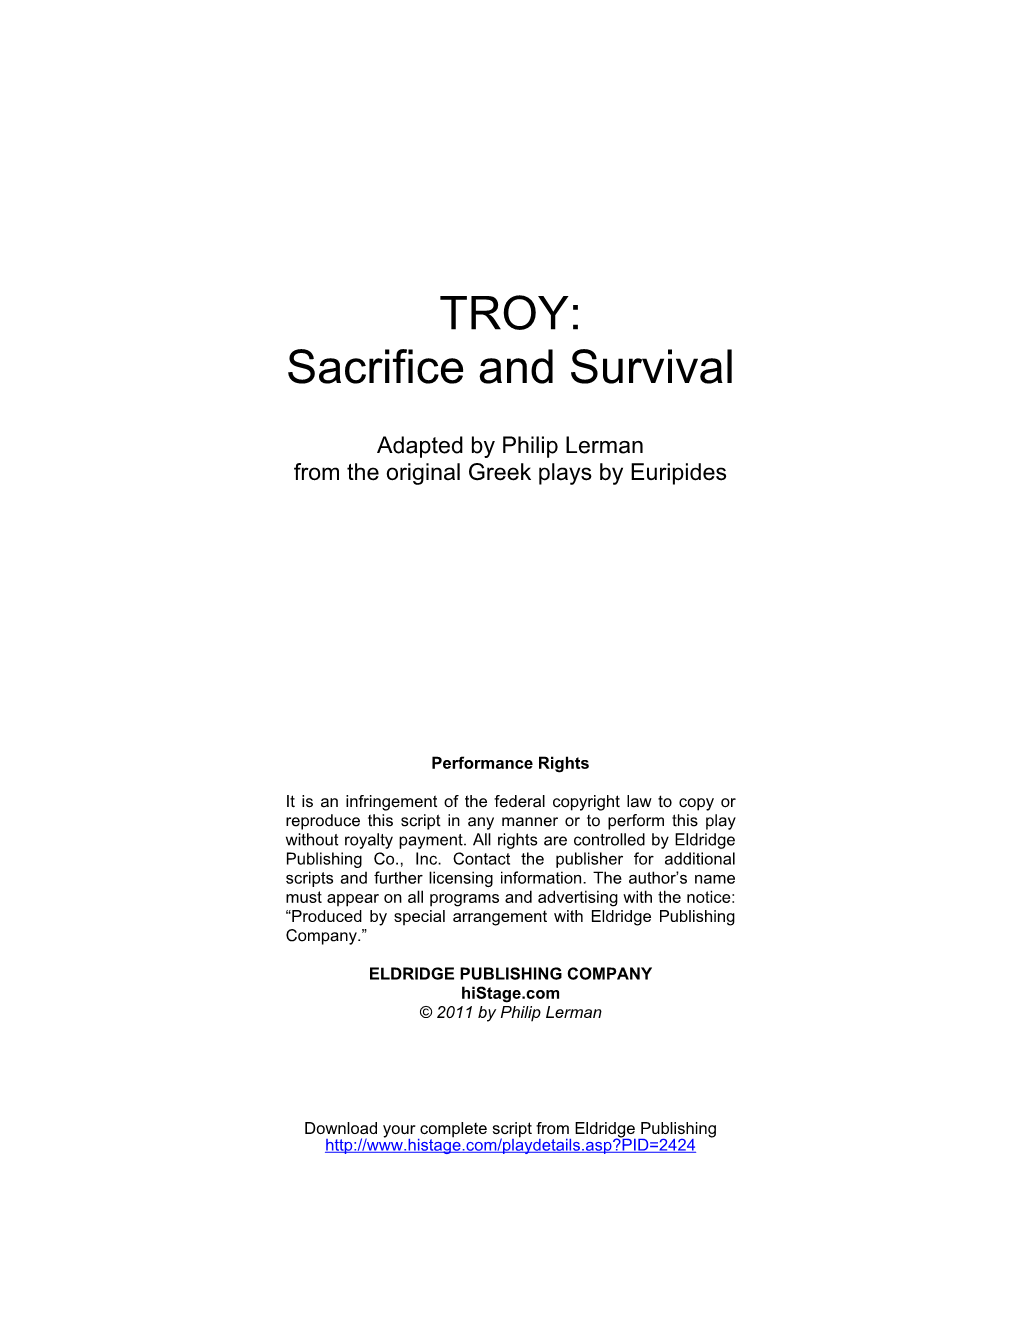 TROY: Sacrifice and Survival